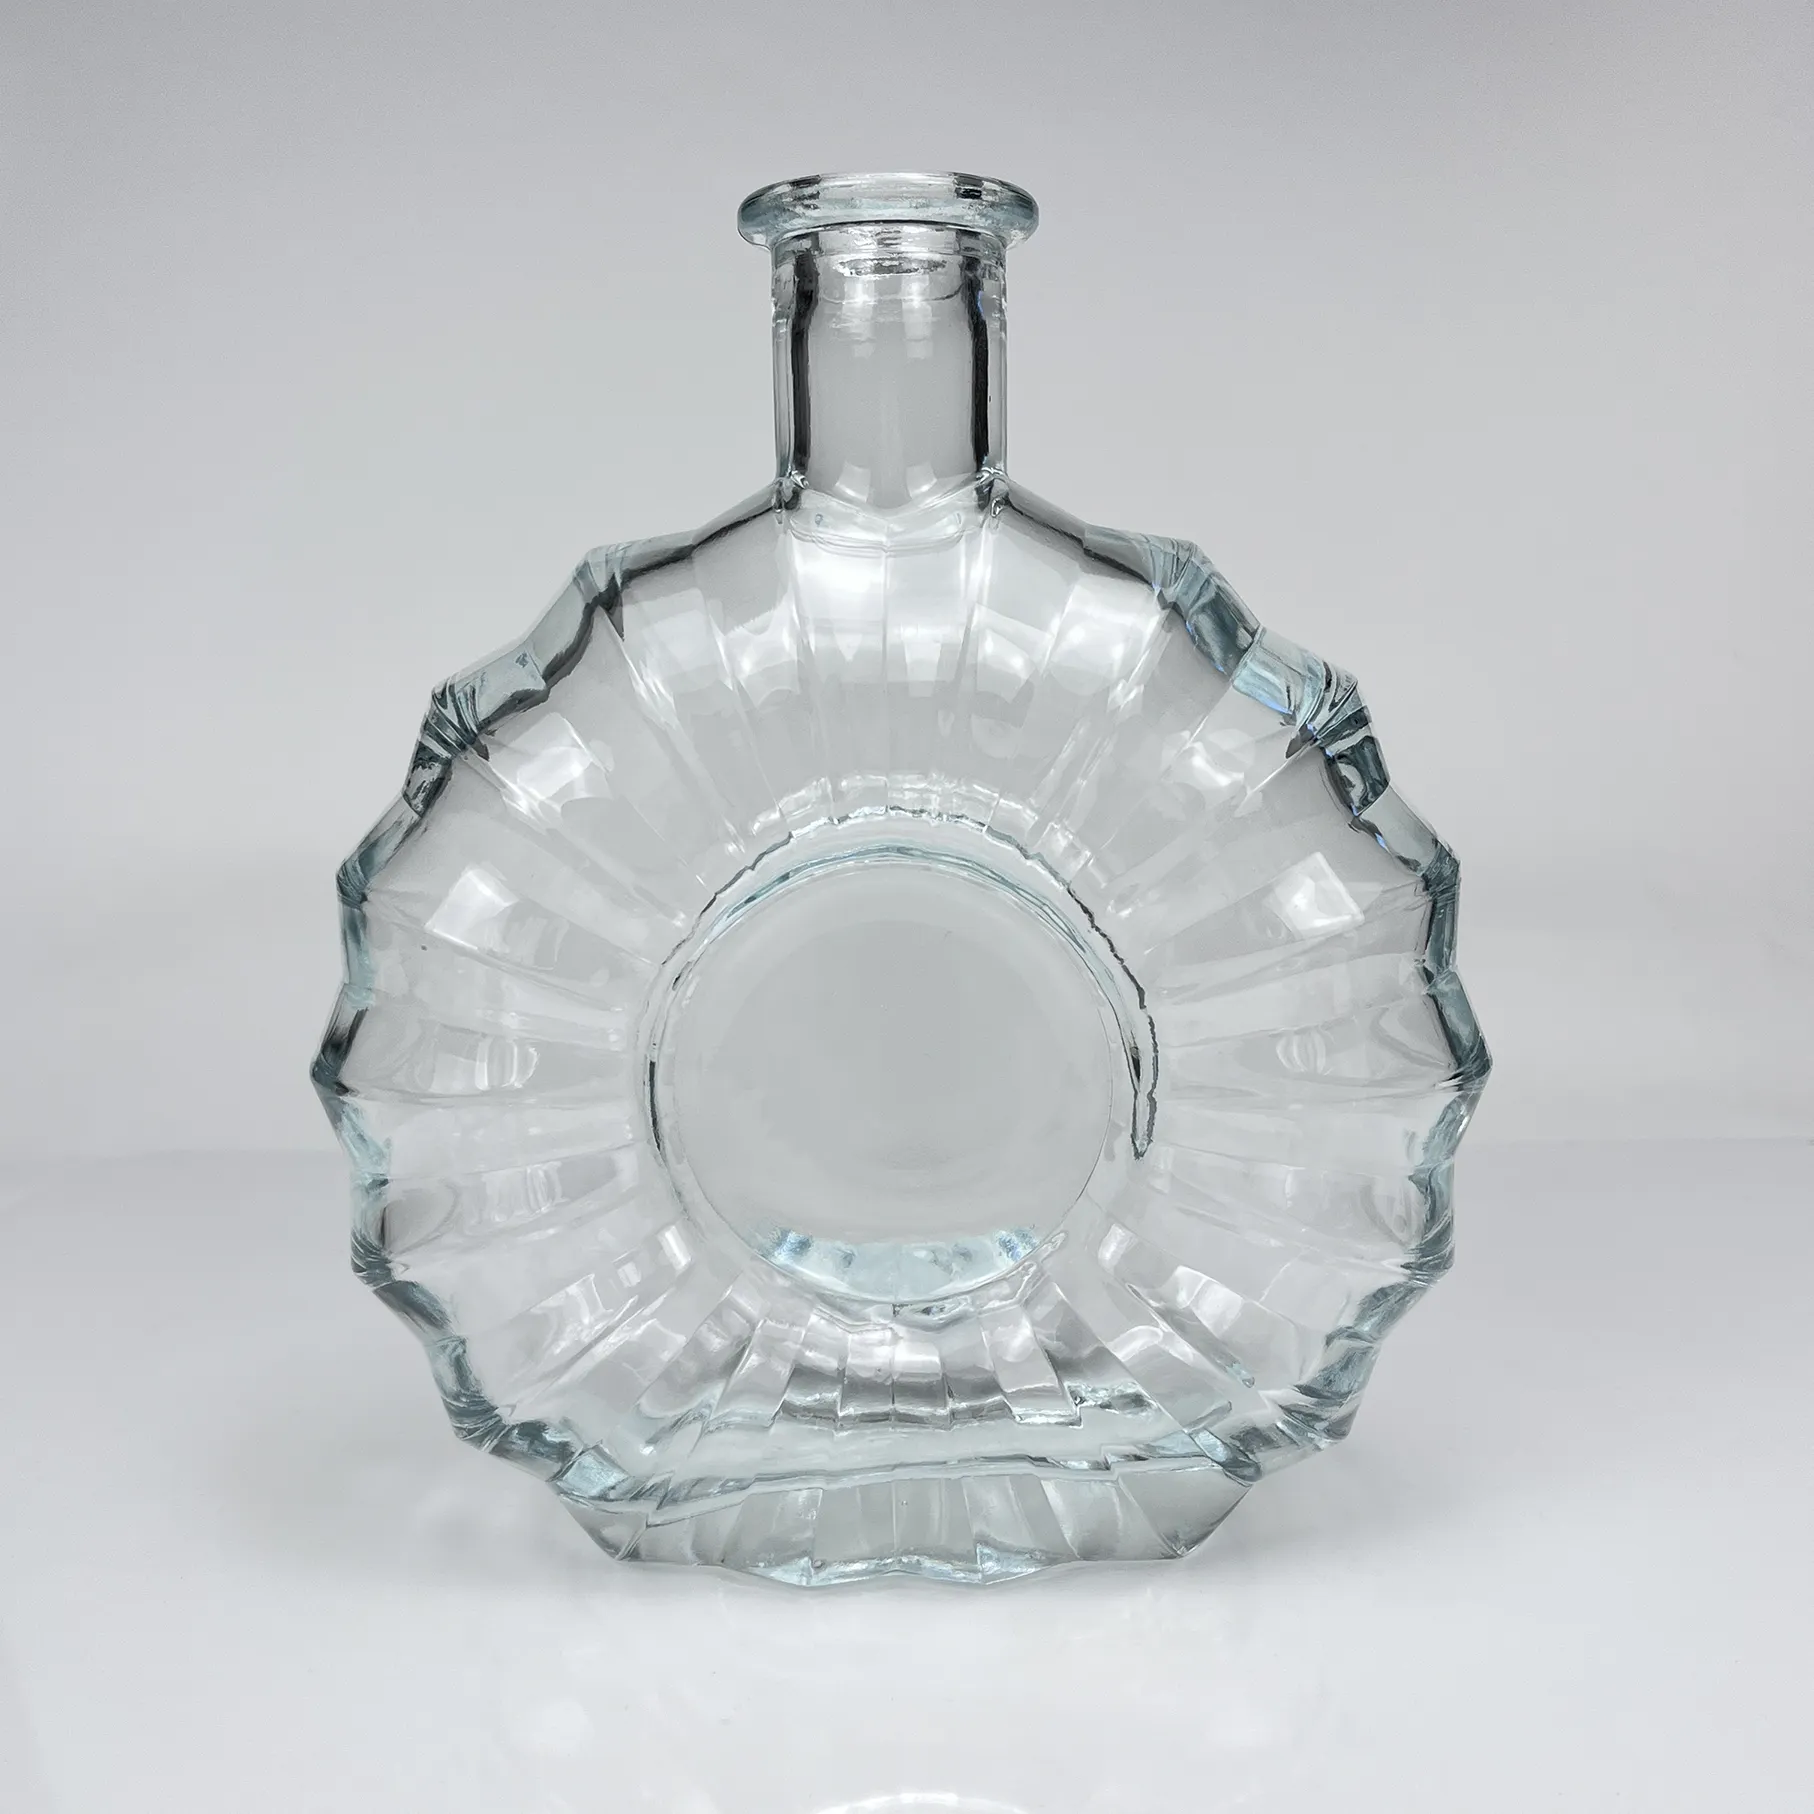 Hot Sale Factory Direkter Preis Tragbares Kristall material Premium Glasflasche